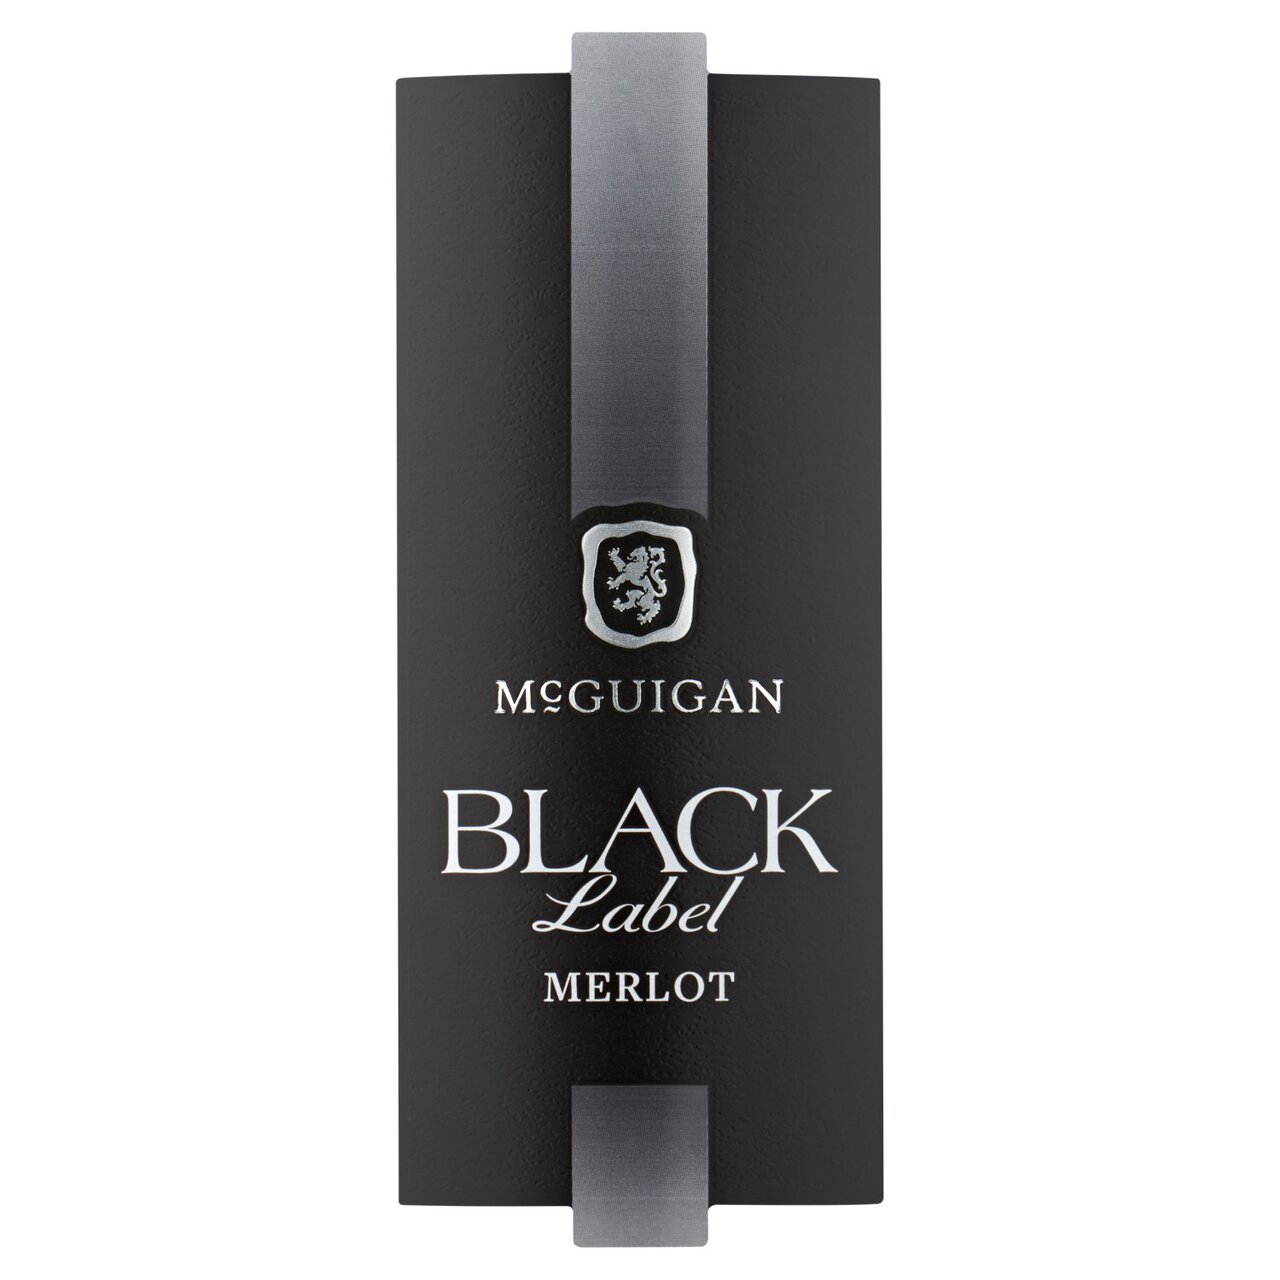 McGuigan Black Label Merlot 75cl